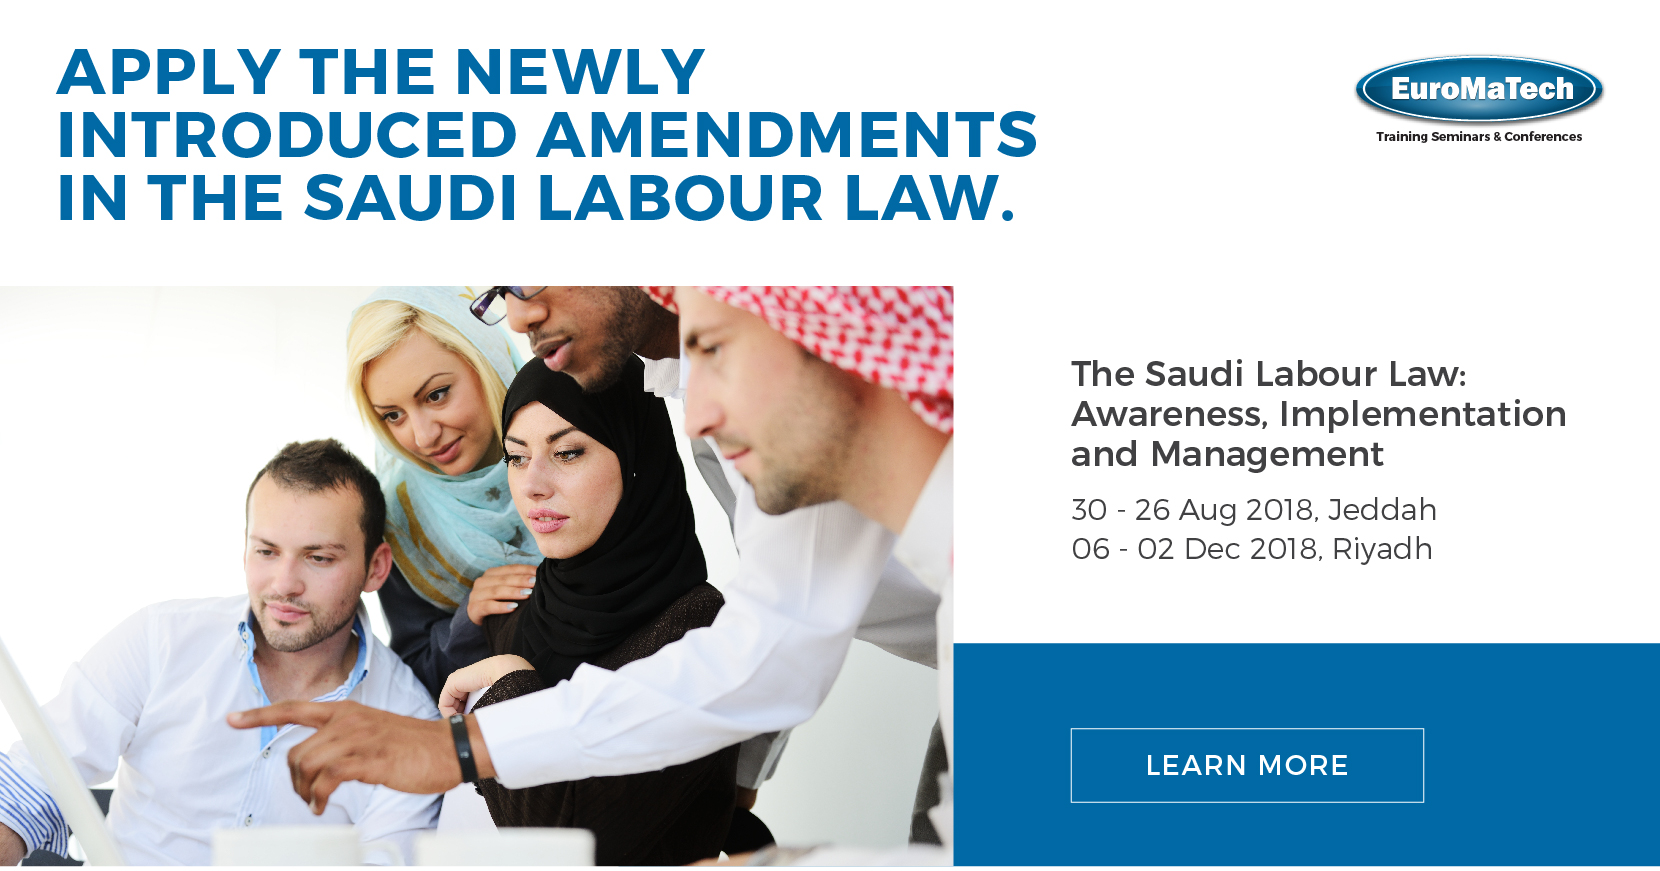 The Saudi Labour Law Training Course